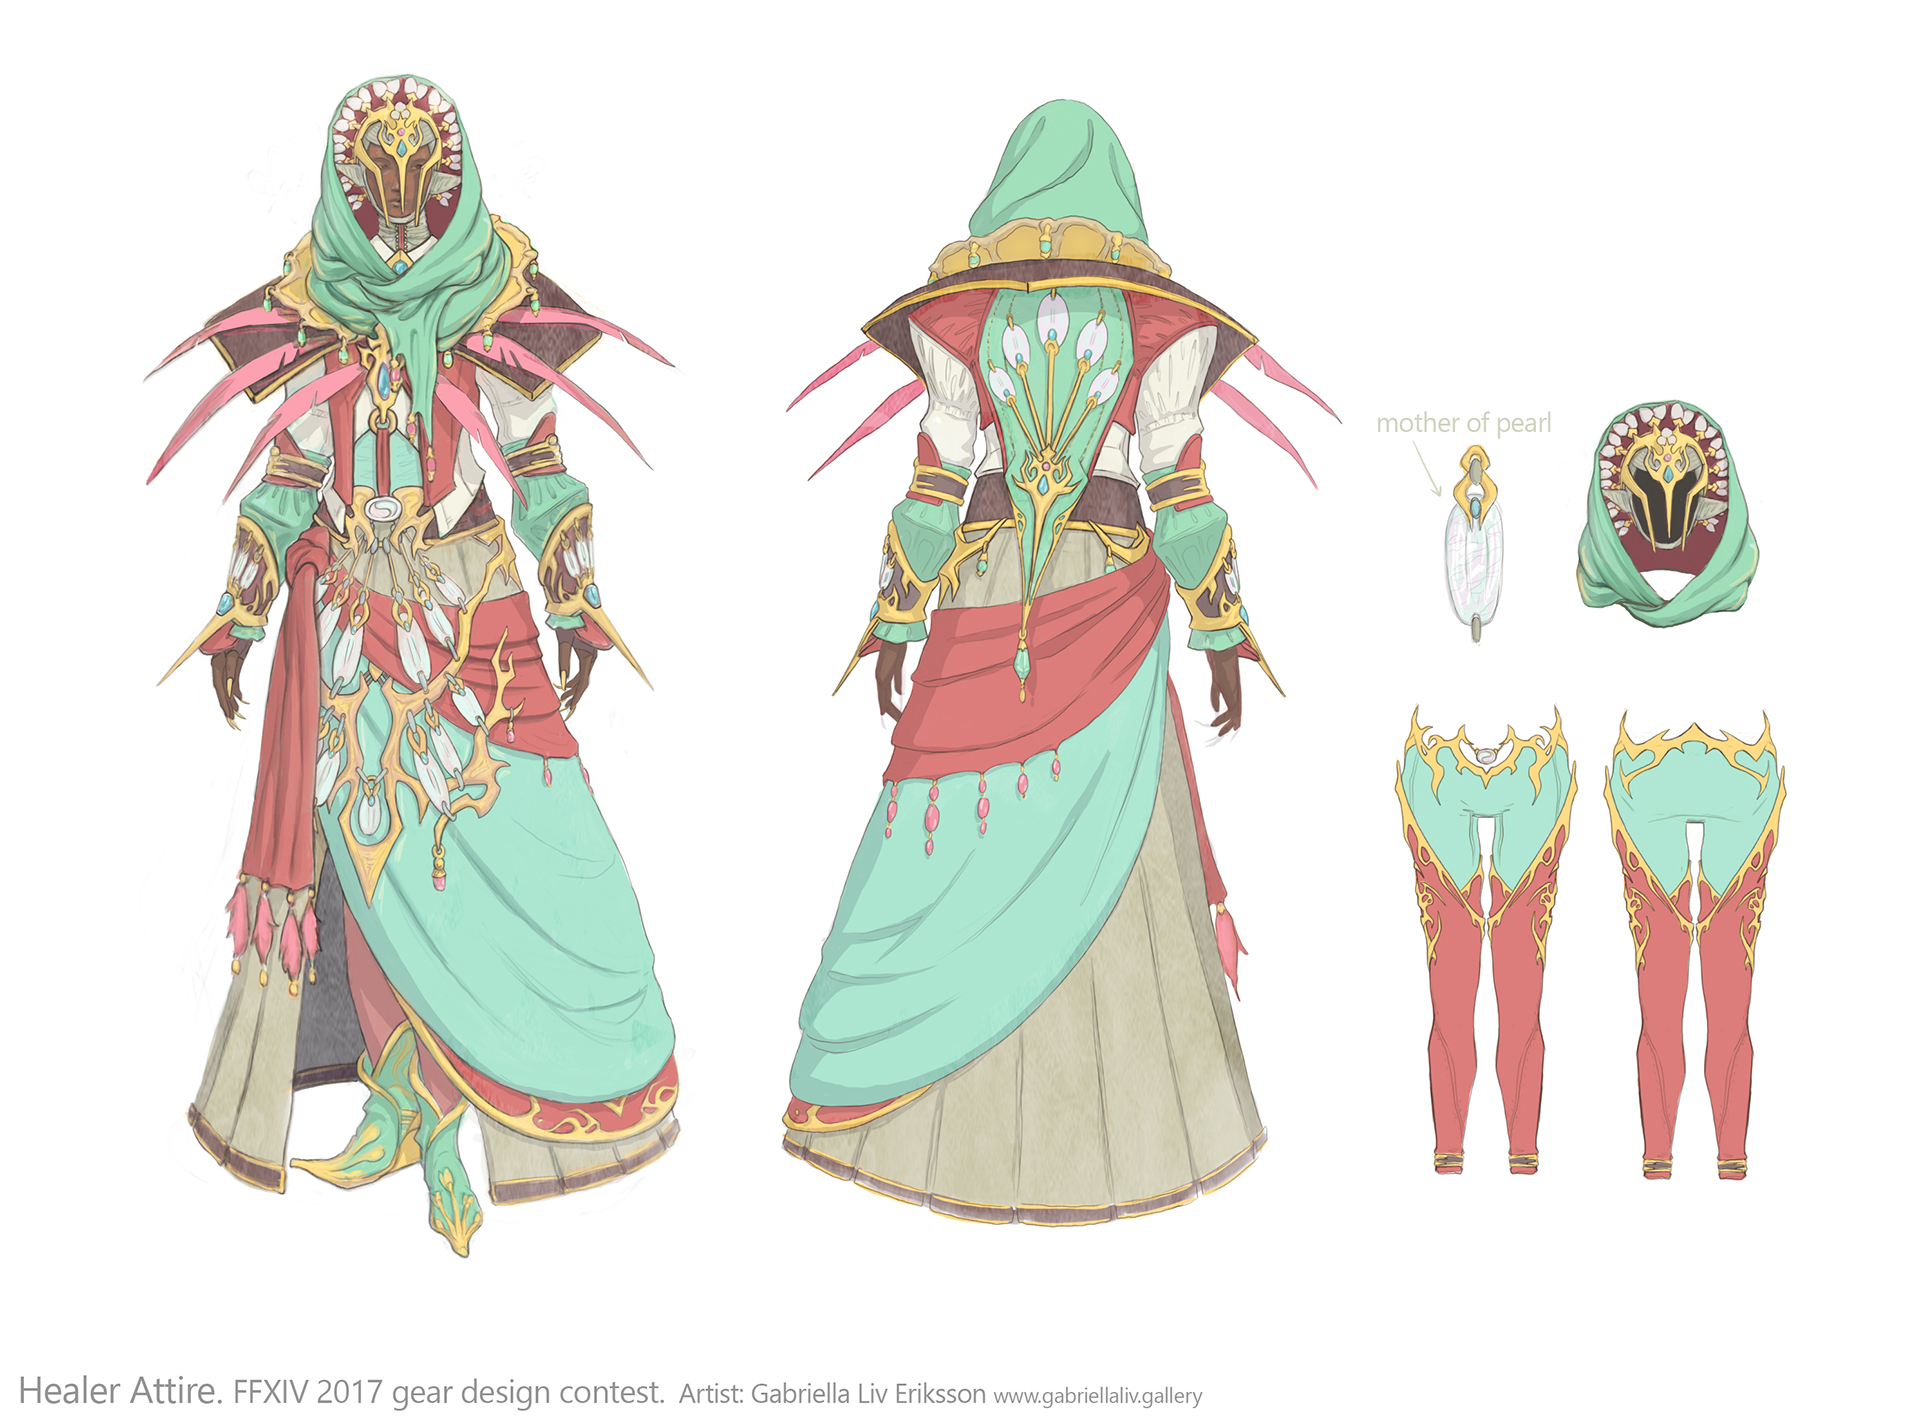 xcion – Final Fantasy XIV Healer – Final Fantasy XIV Concept Art Design Contest by Gabriella Liv Eriksson